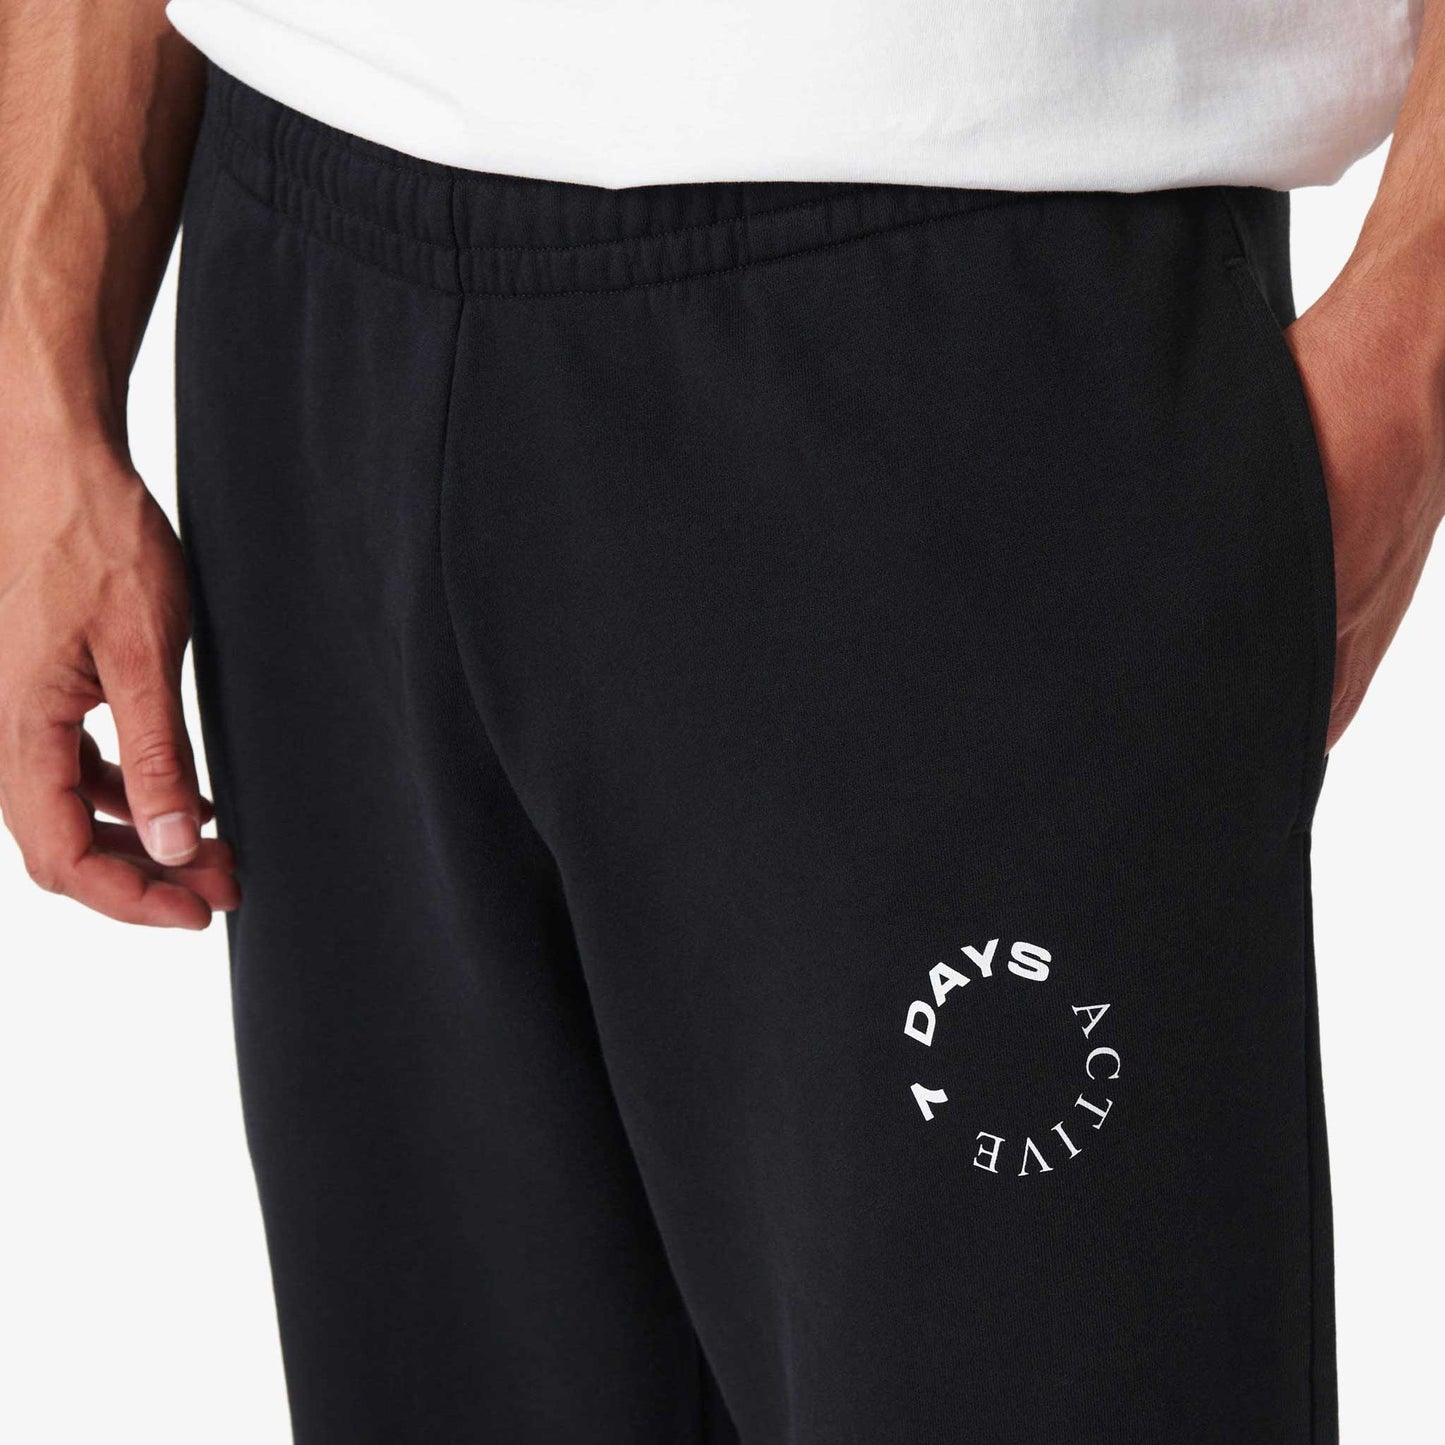 Black Organic Cotton Sweatpants by 7Days Active